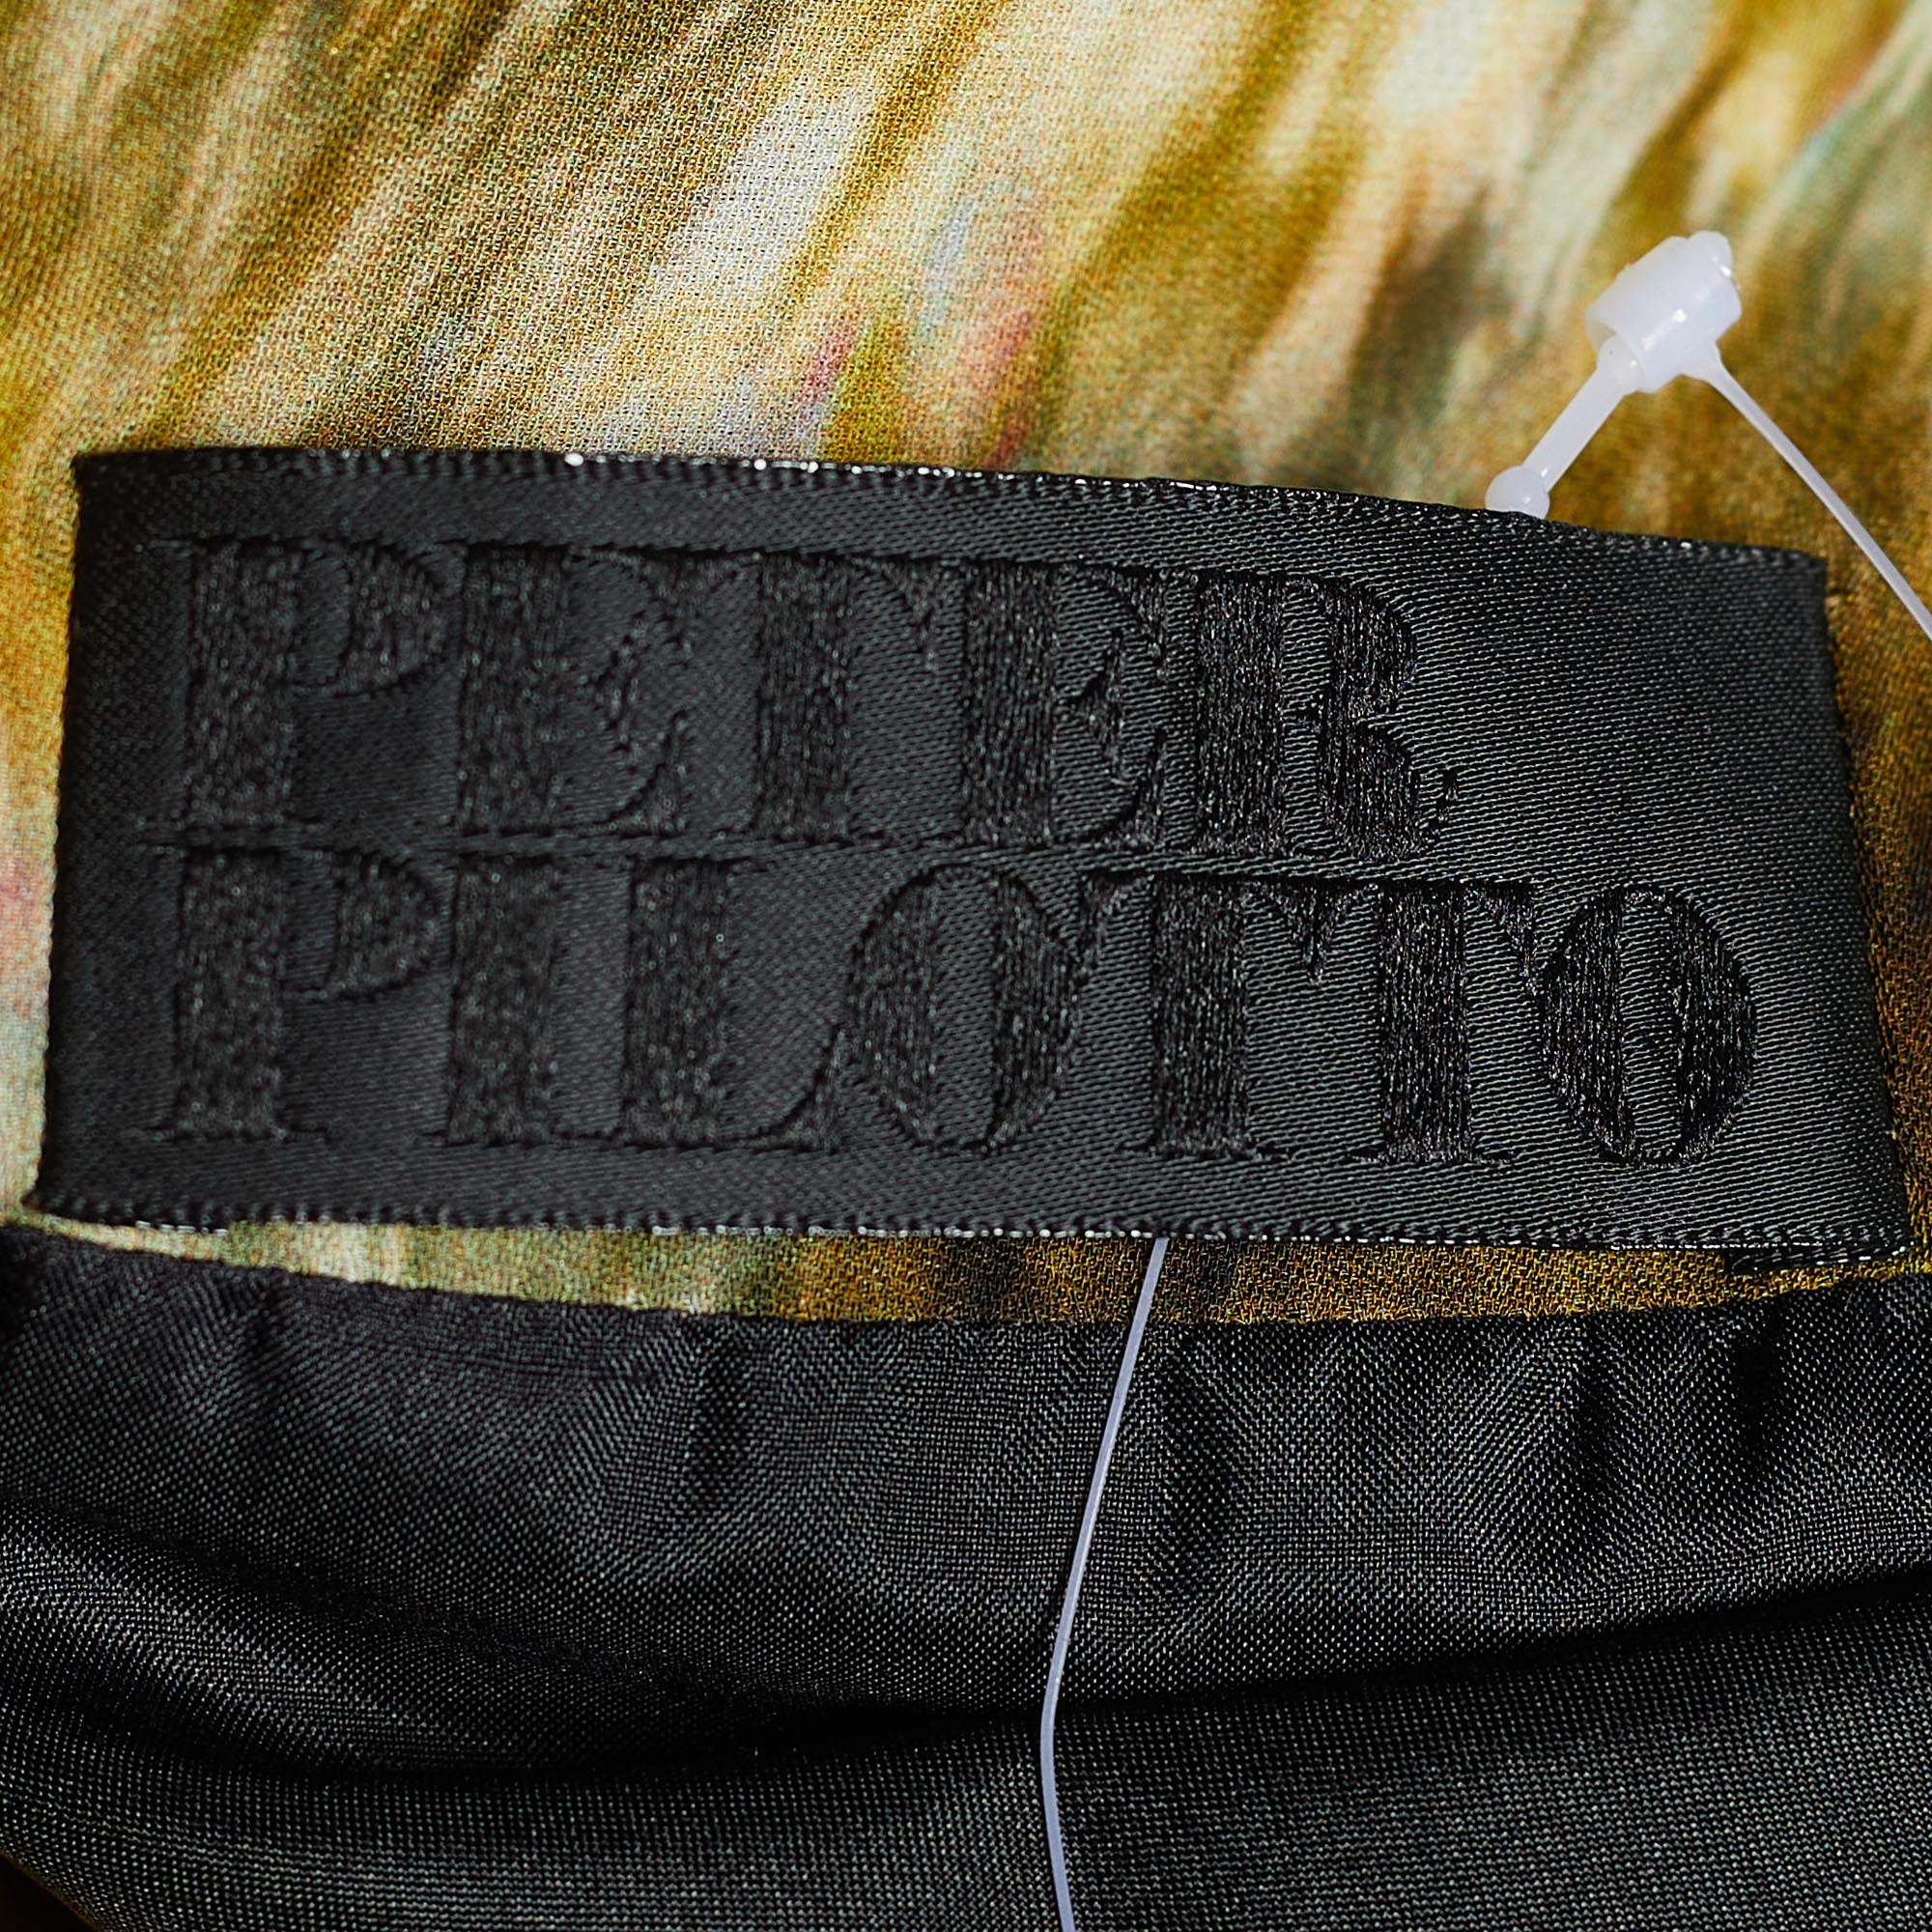 Peter Pilotto Multicolor Printed Silk Dress S